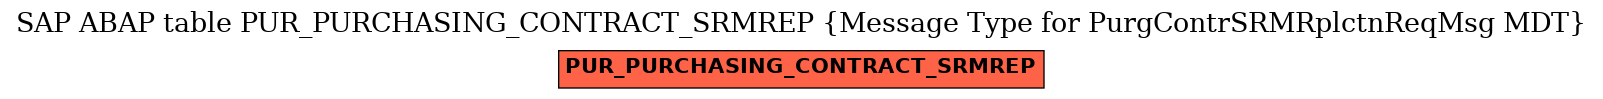 E-R Diagram for table PUR_PURCHASING_CONTRACT_SRMREP (Message Type for PurgContrSRMRplctnReqMsg MDT)